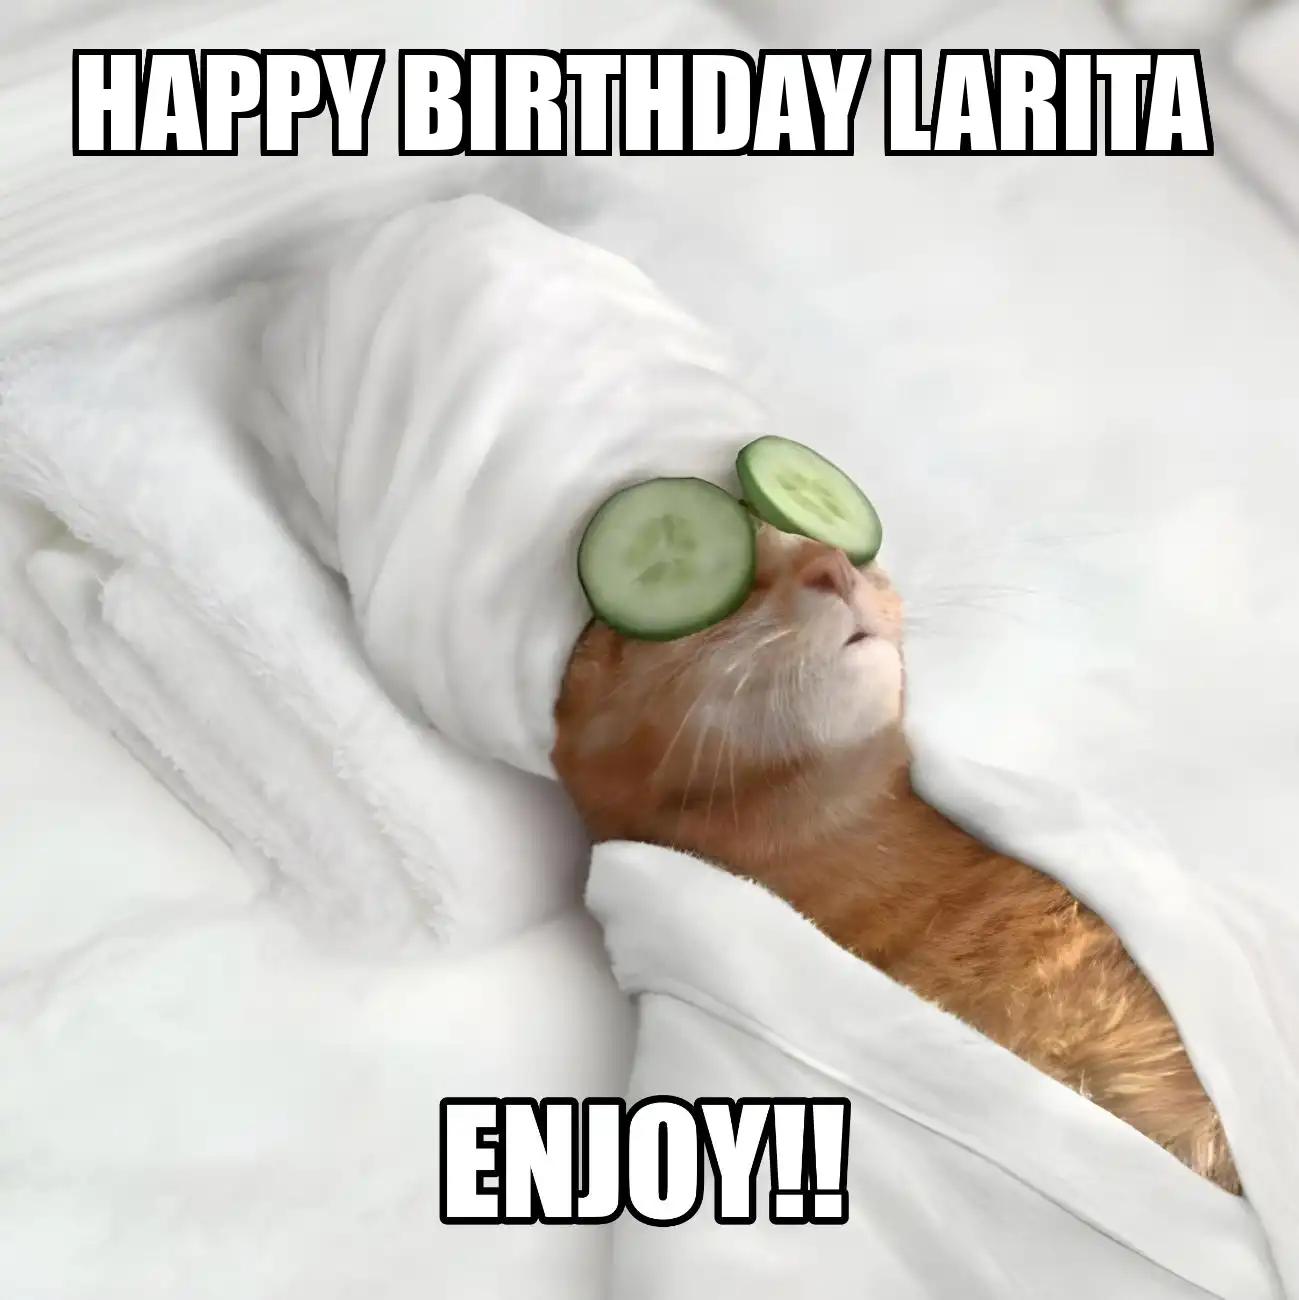 Happy Birthday Larita Enjoy Cat Meme